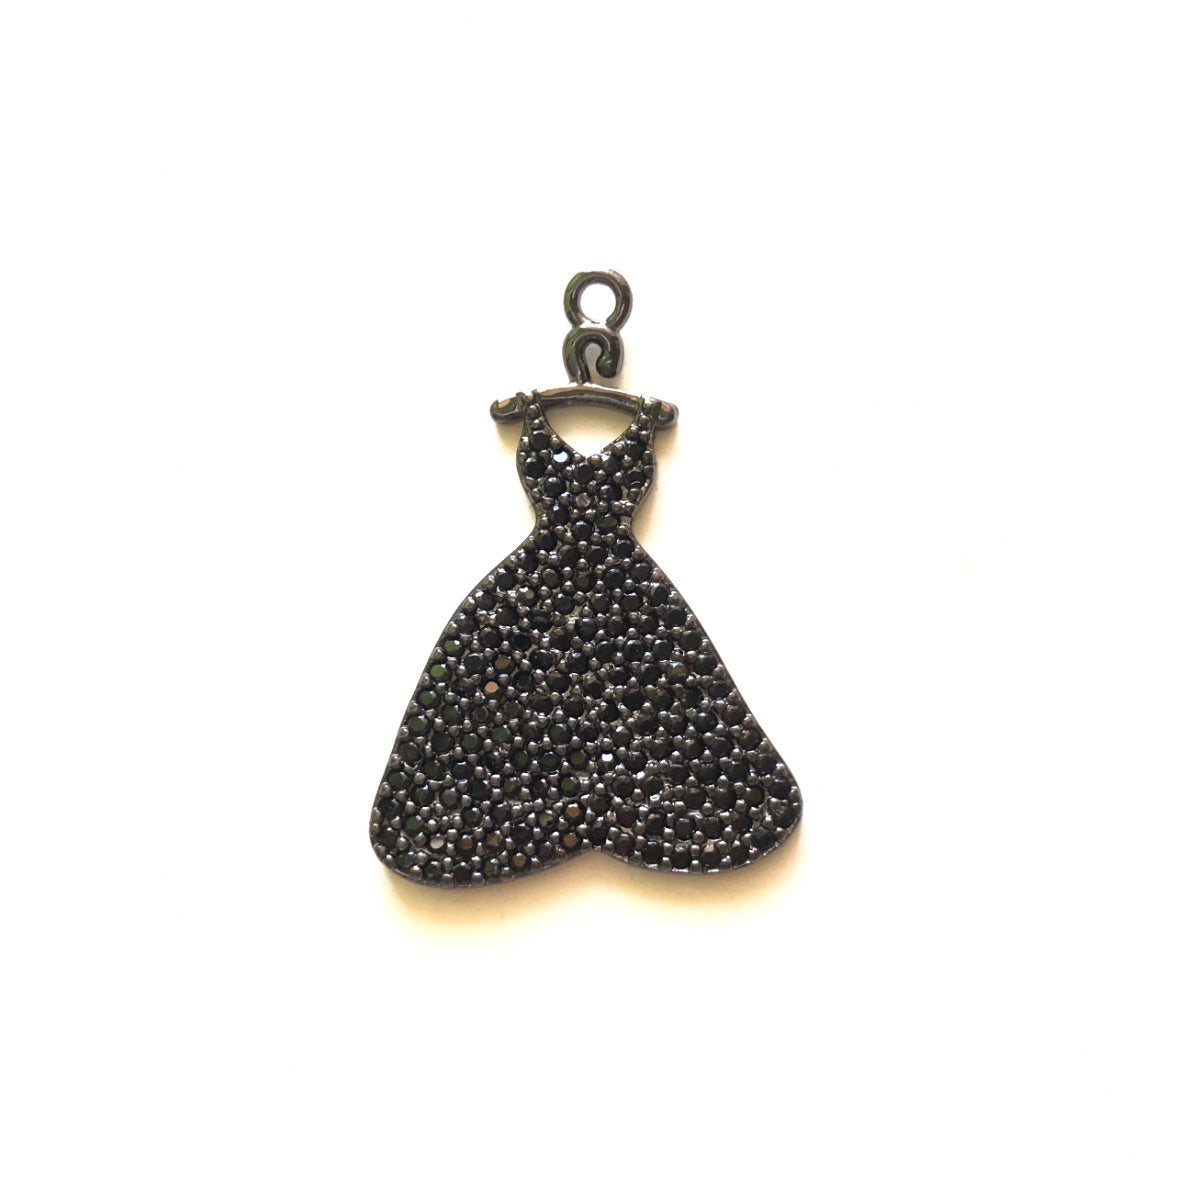 10pcs/lot 31*21mm CZ Paved Dress Charms Black on Black CZ Paved Charms Fashion Charms Beads Beyond